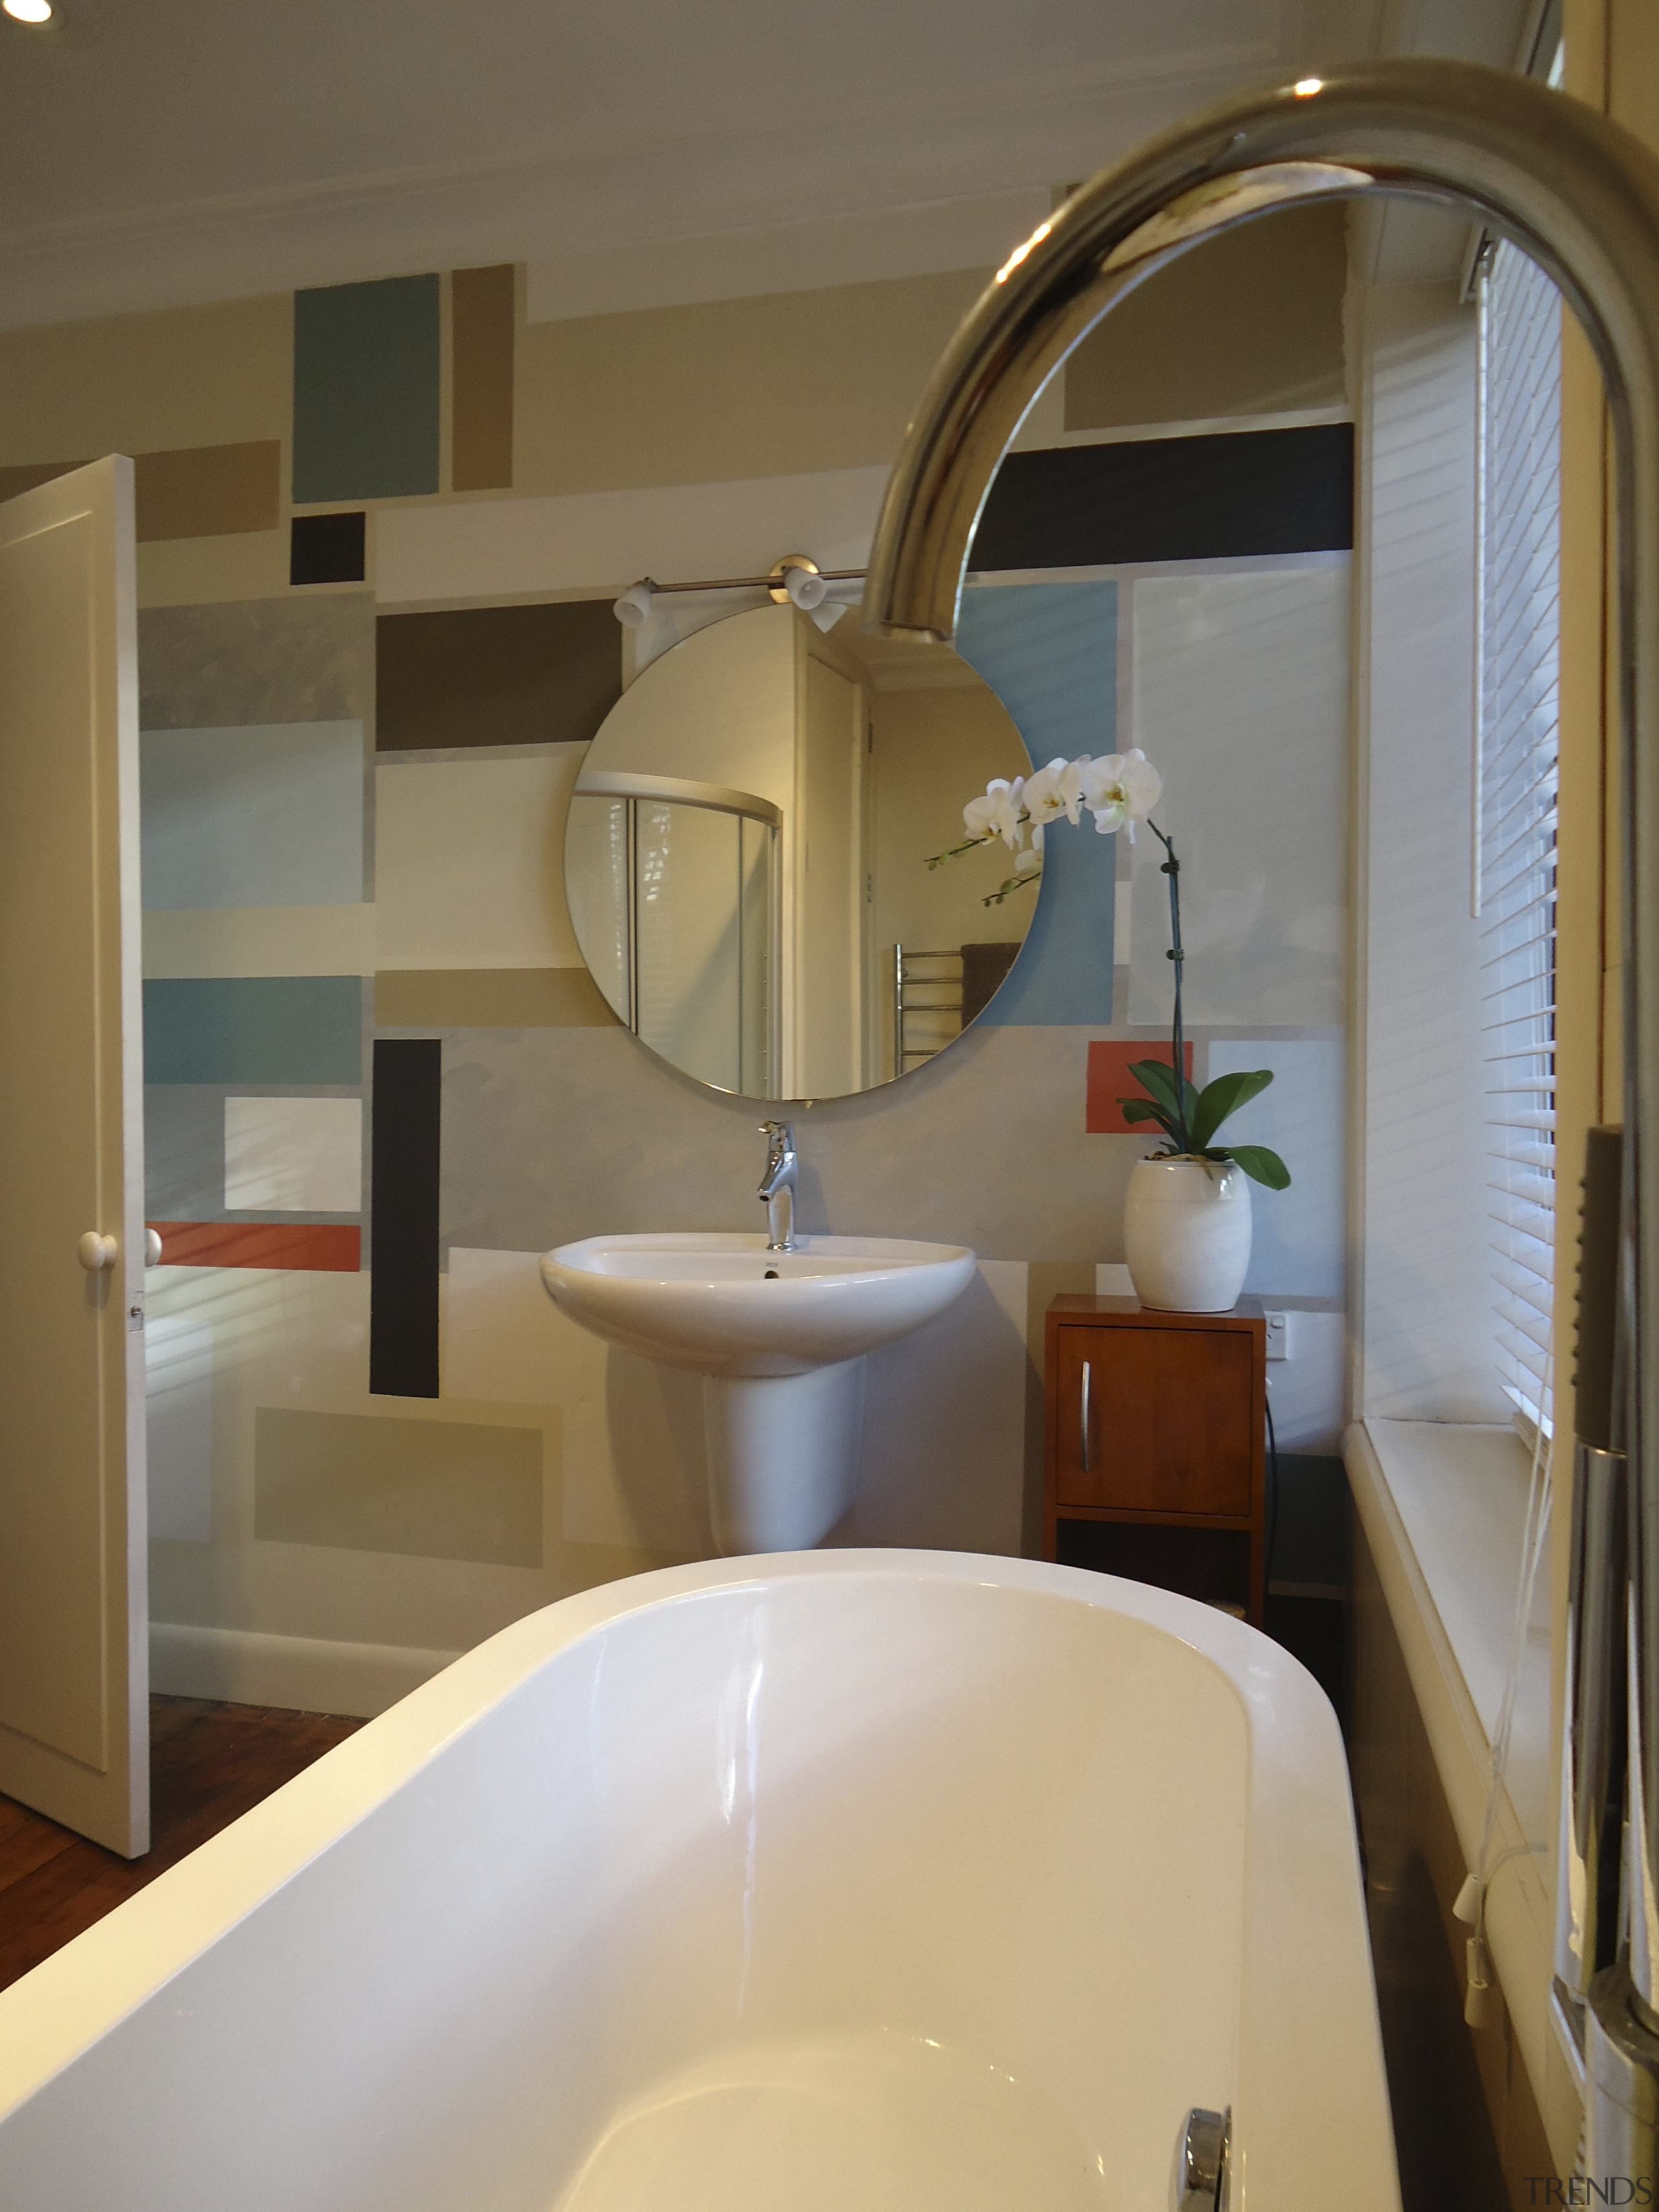 This bathroom is painted in Resene SpaceCote Low bathroom, home, interior design, room, sink, tap, brown, gray